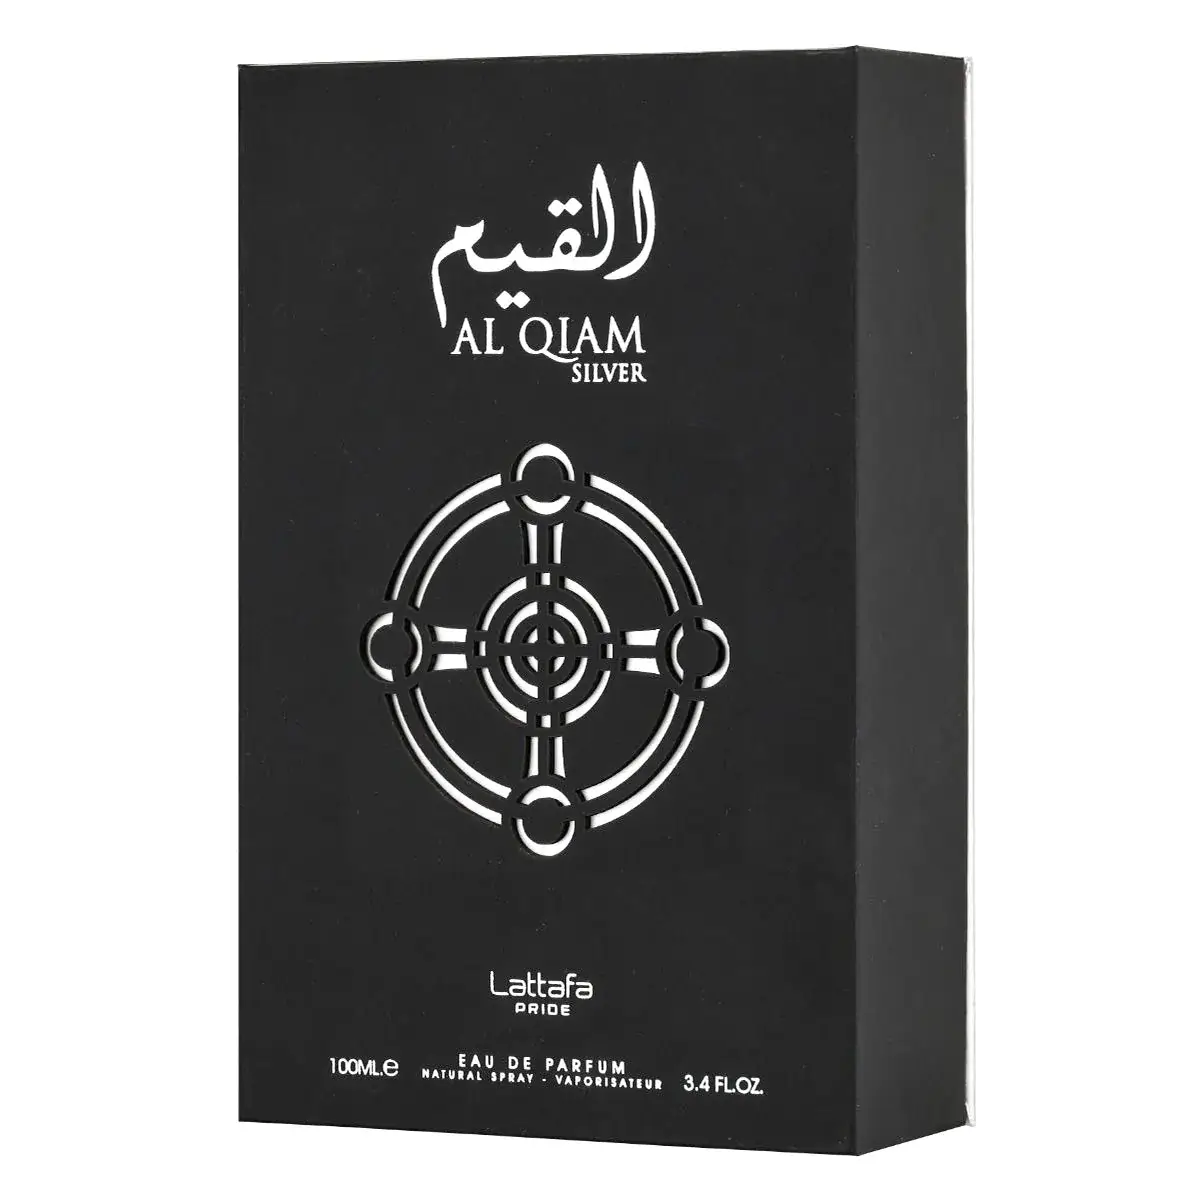 Al Qiam Silver Perfume / Eau De Parfum 100Ml By Lattafa Pride 